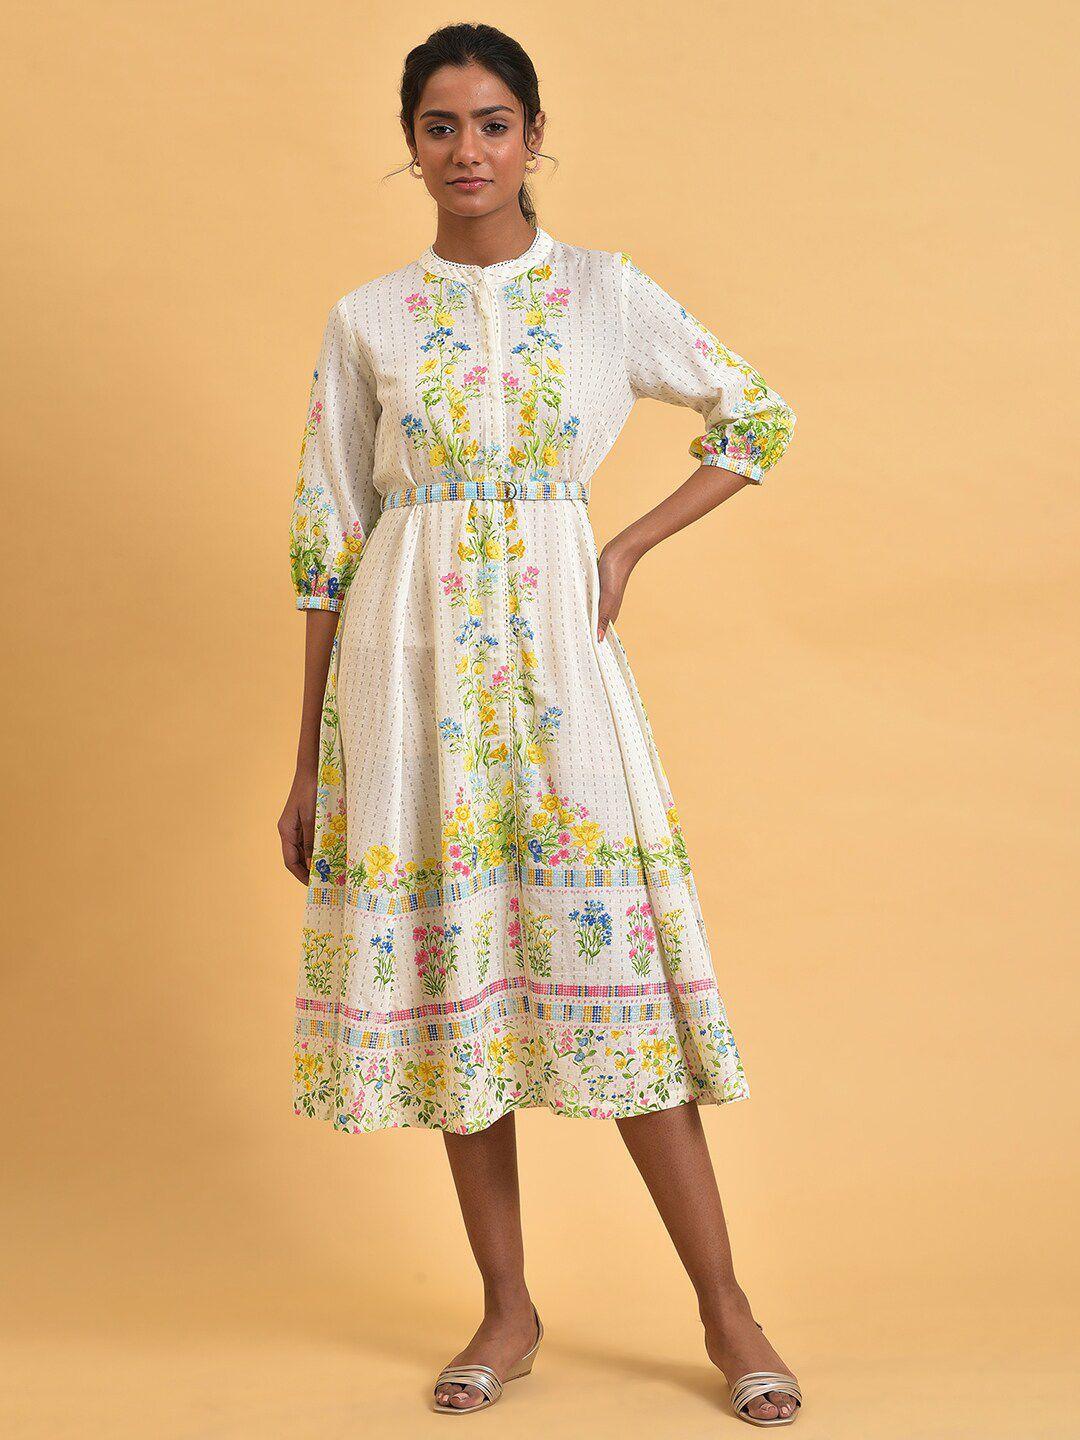 w plus size floral printed shirt style midi ethnic dress